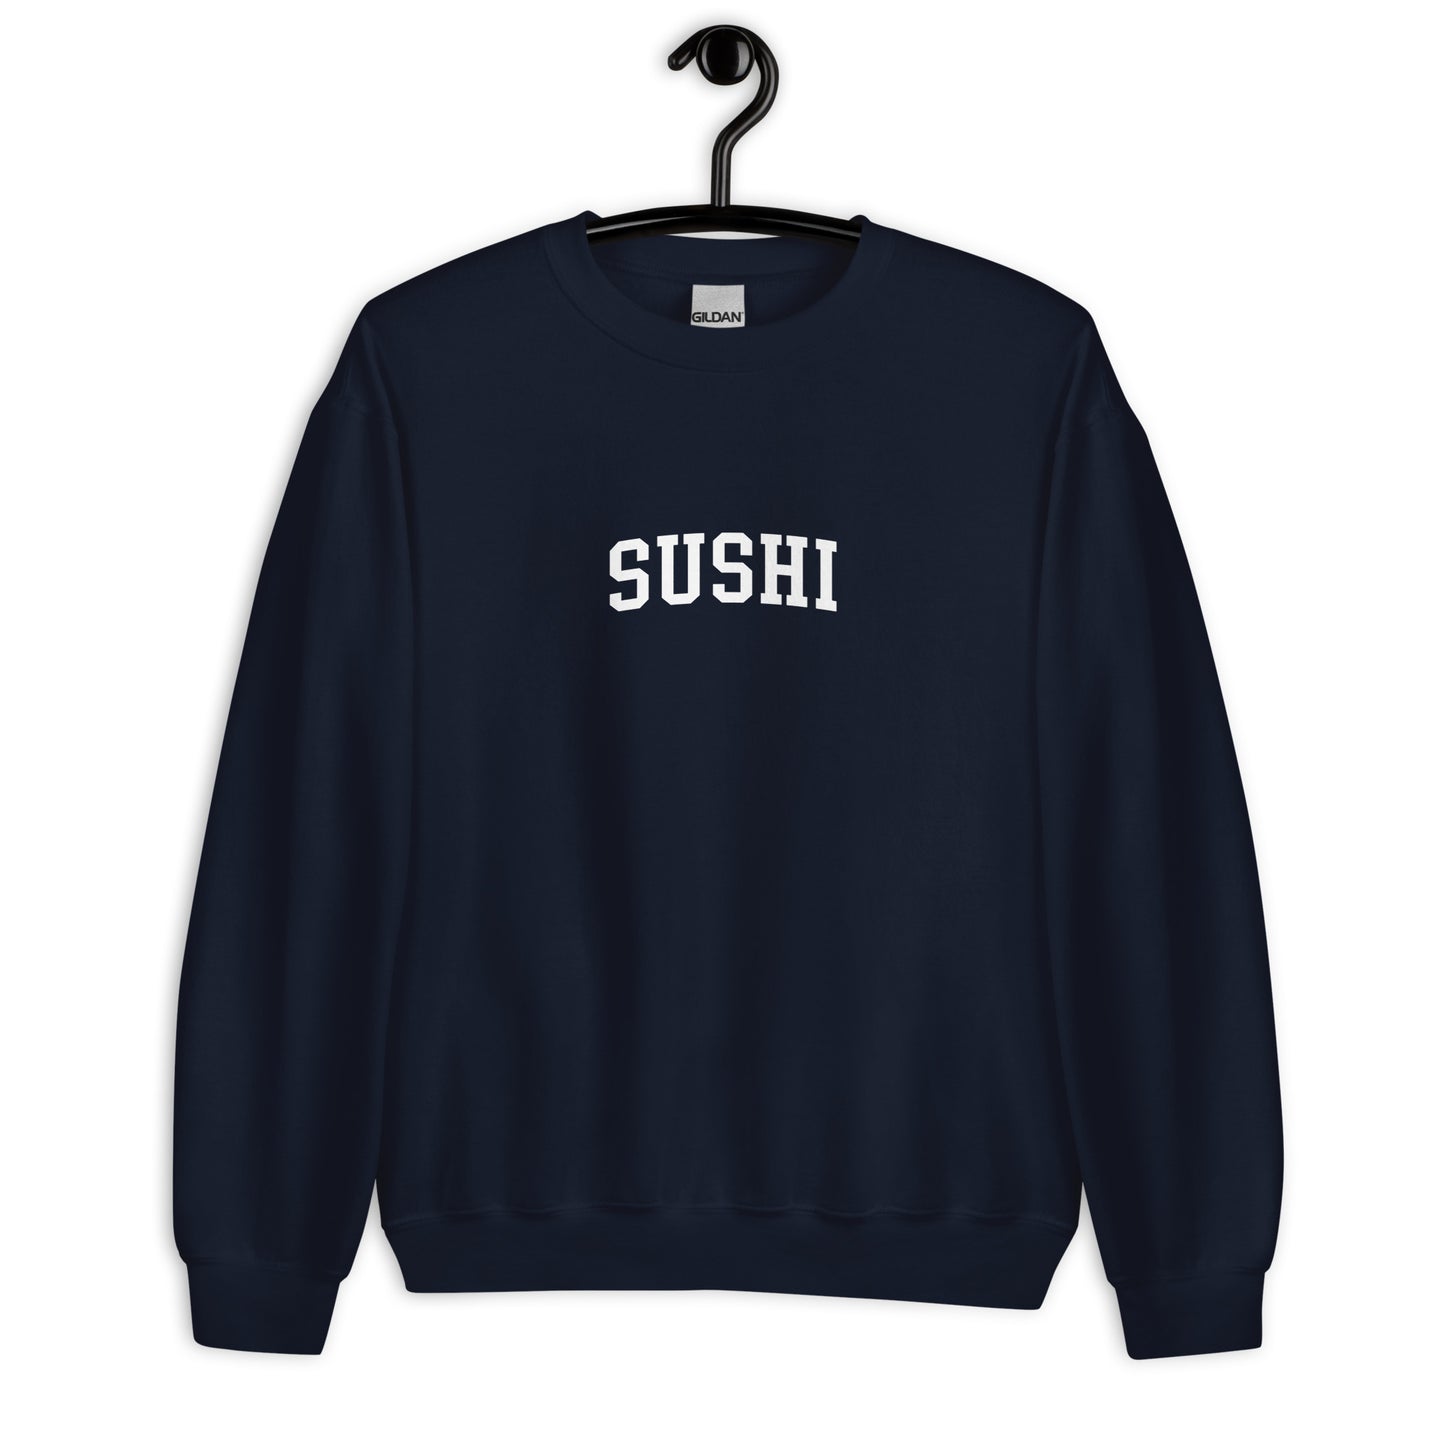 Sushi Sweatshirt - Arched Font